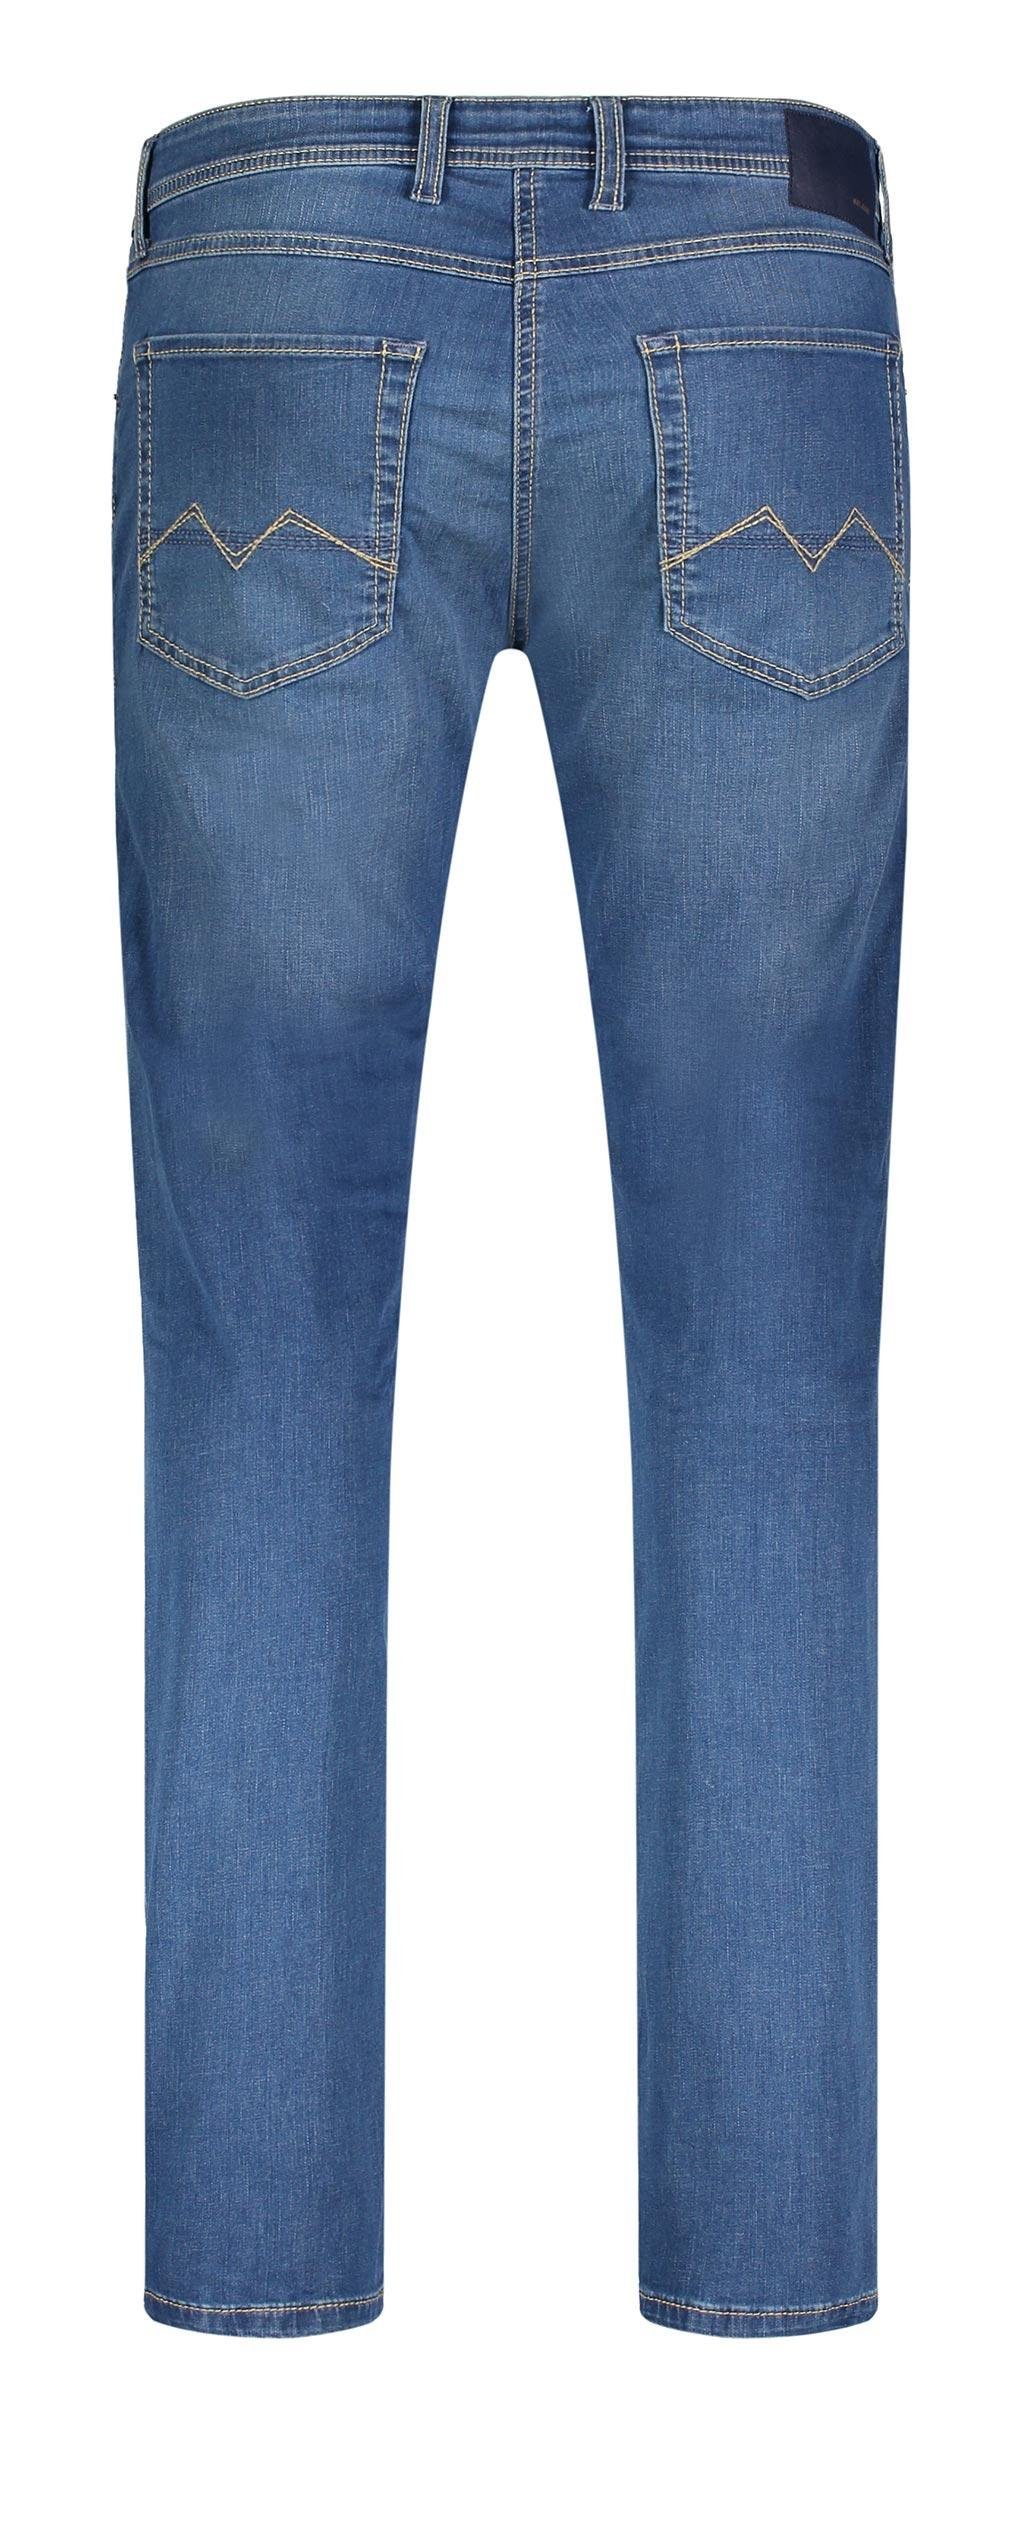 0501-00-1792 MAC 5-Pocket-Jeans mid summer H459 wash MAC ARNE blue